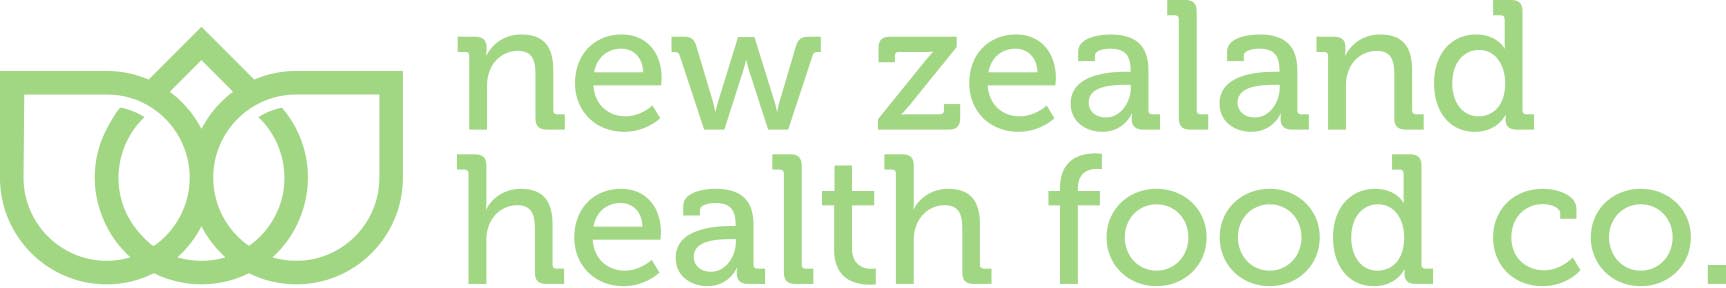 NZ Health Food Co Logo